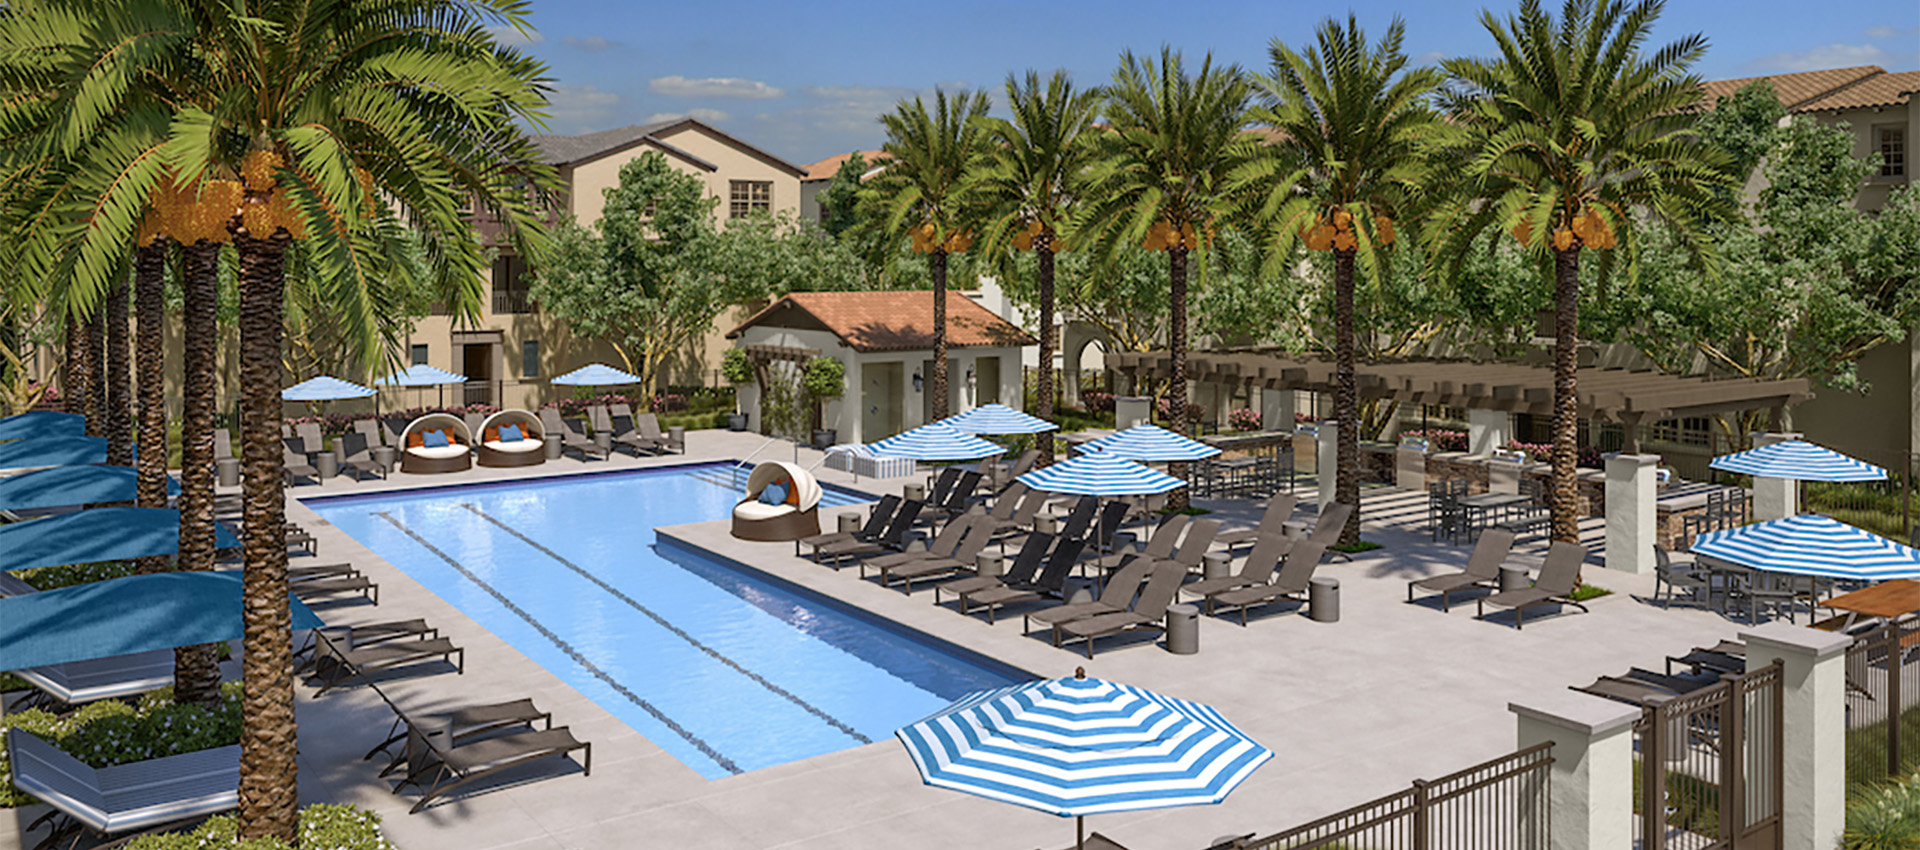 Rendering image of the amenities at Rancho Tesoro